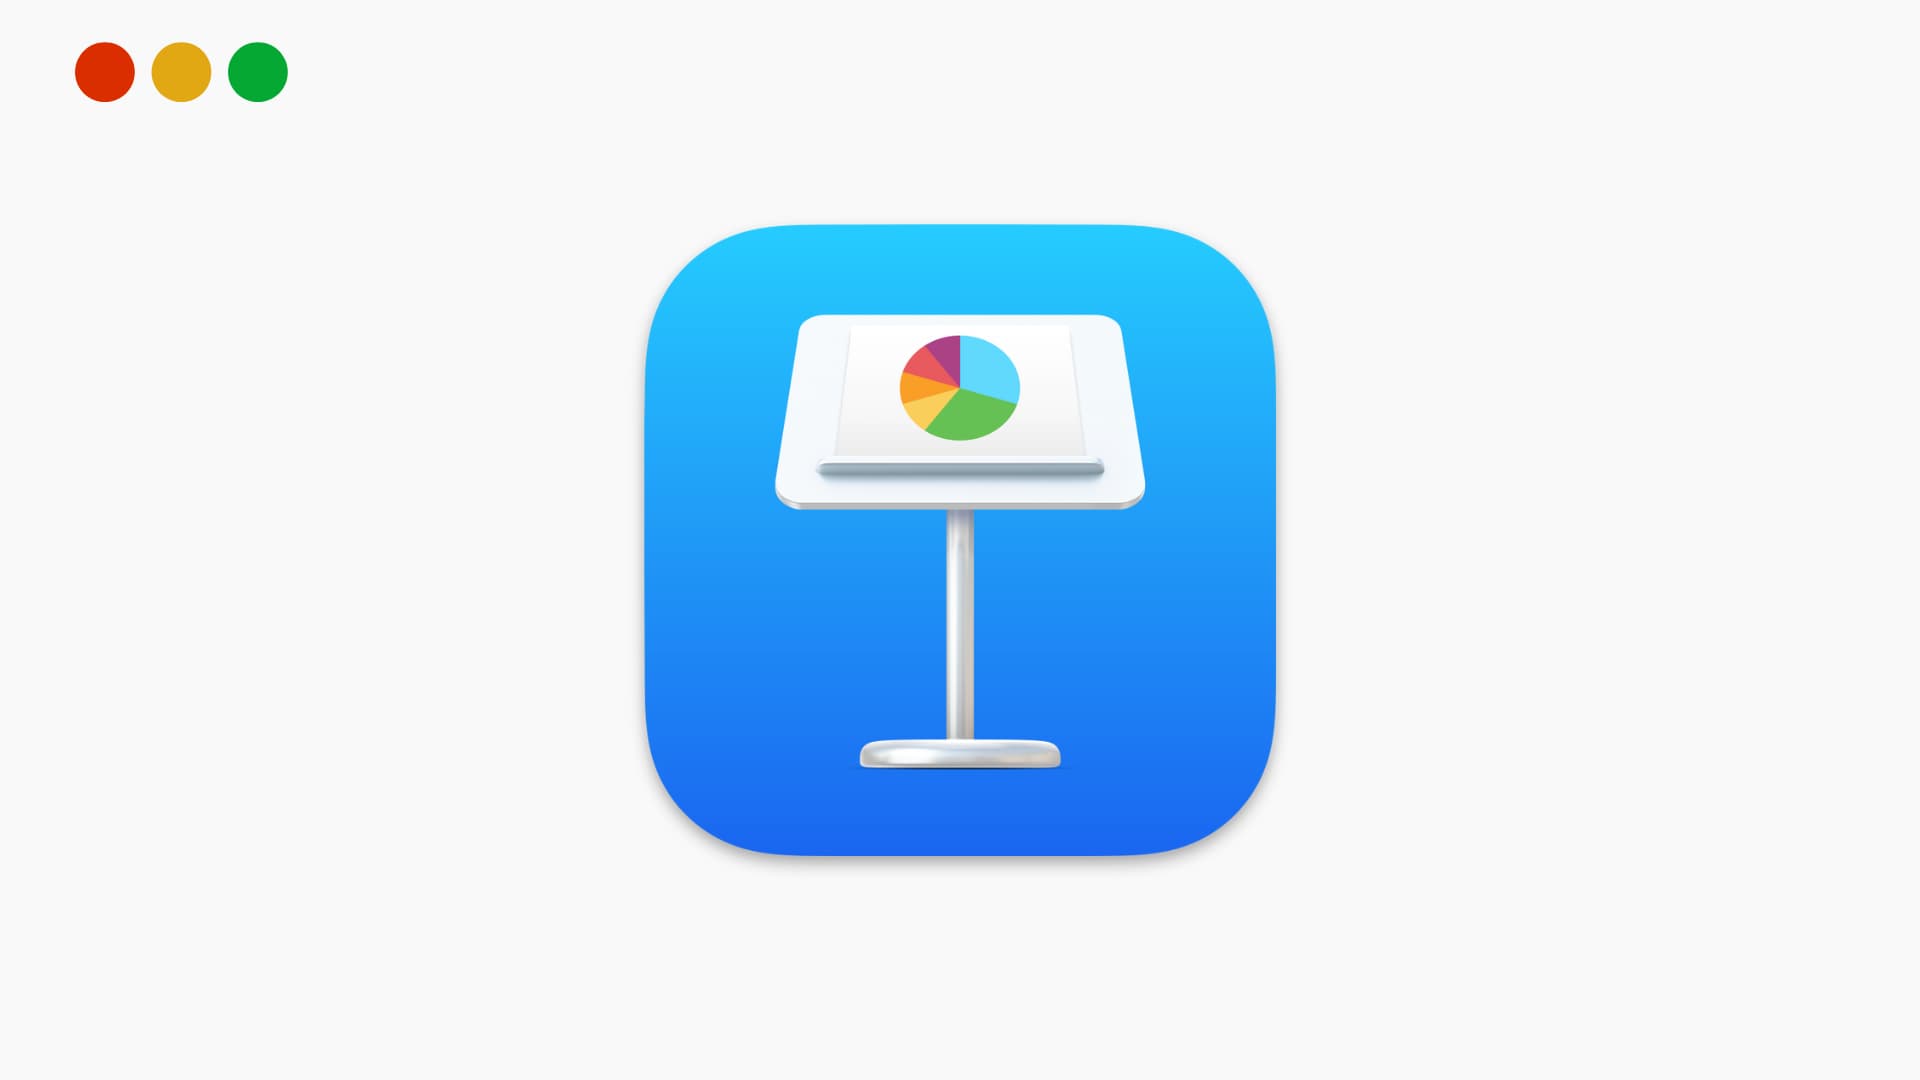 Mac Keynote app icon on a solid gray background